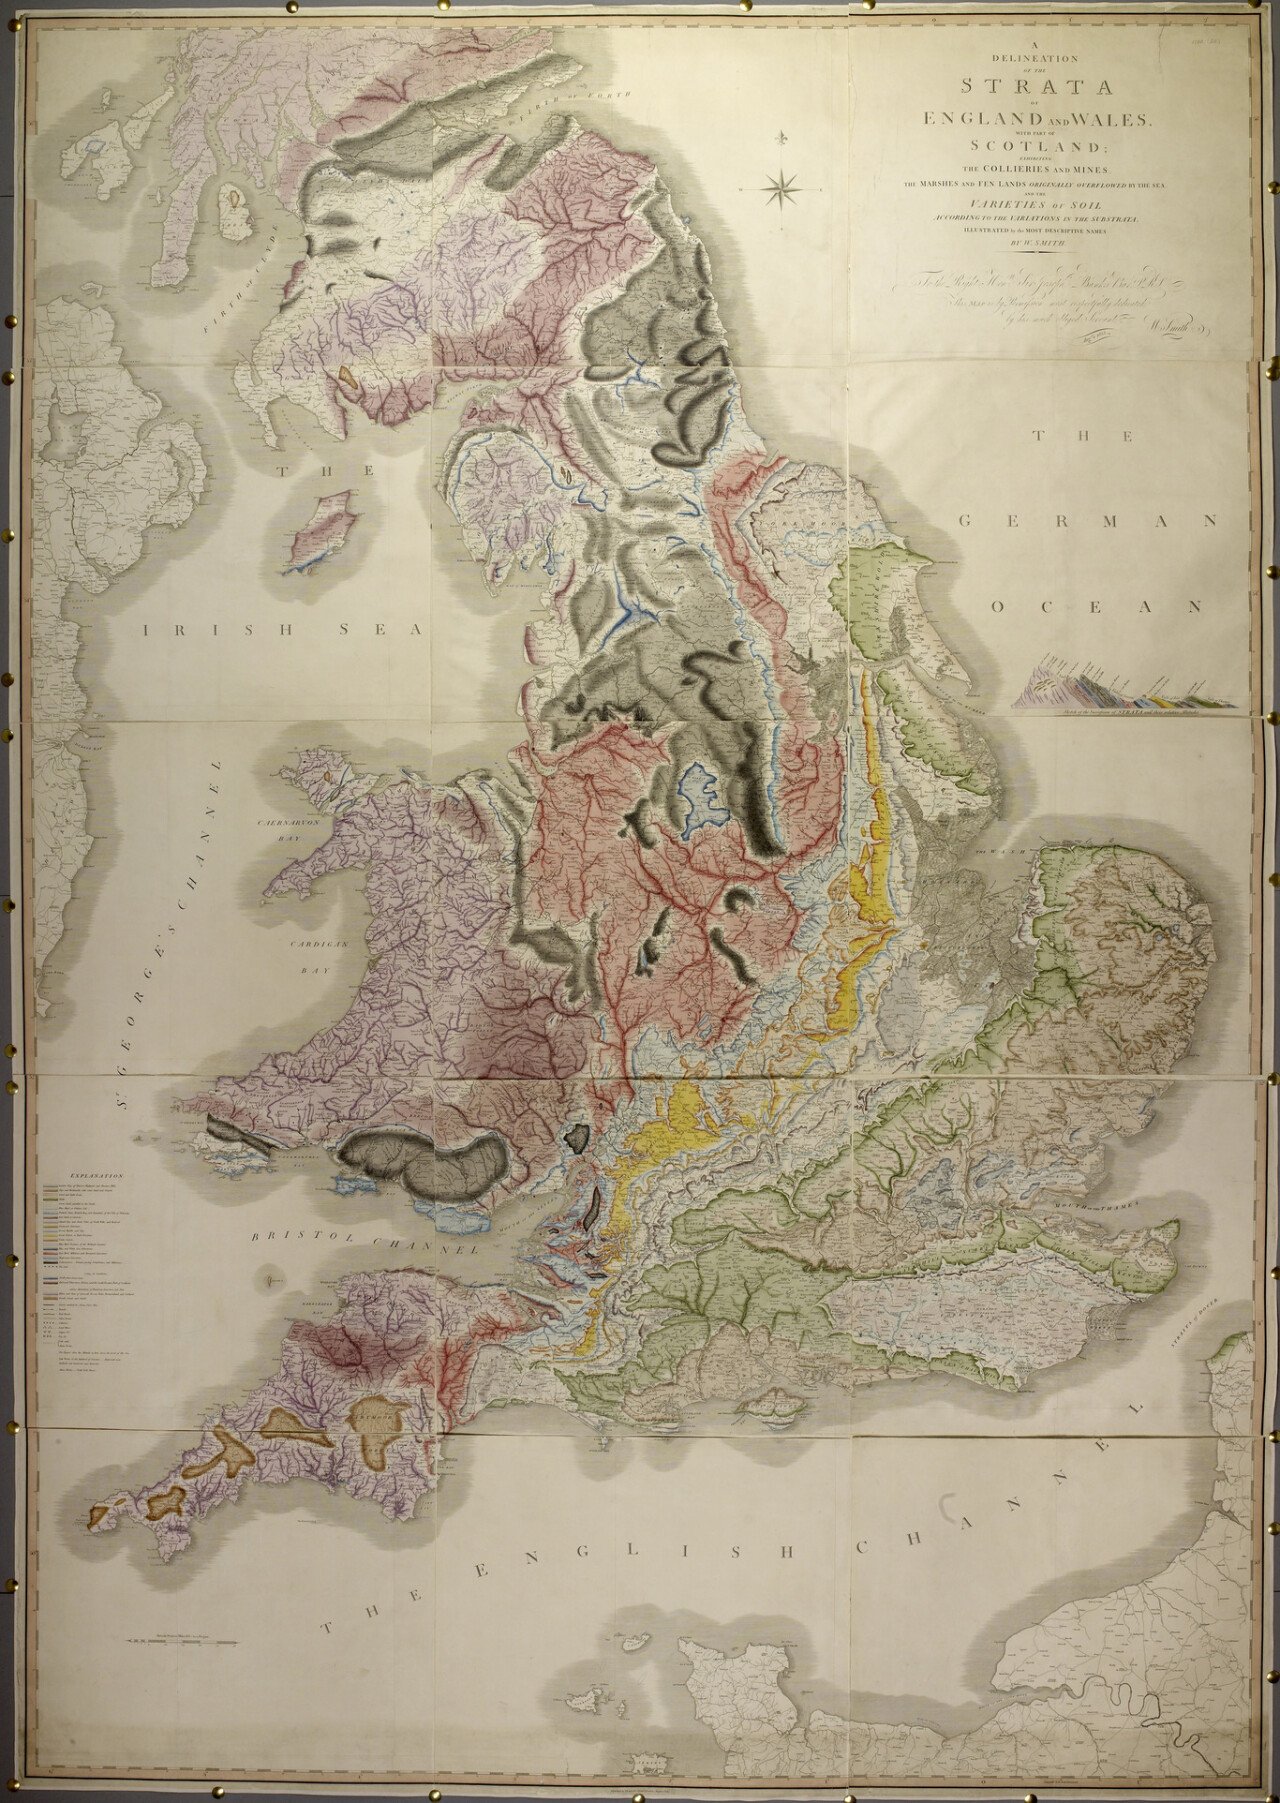 Geological map - William Smith (1815).jpg 대동여지도(1861)가 나오던 시기의 영국의 지도는 어땠을까?